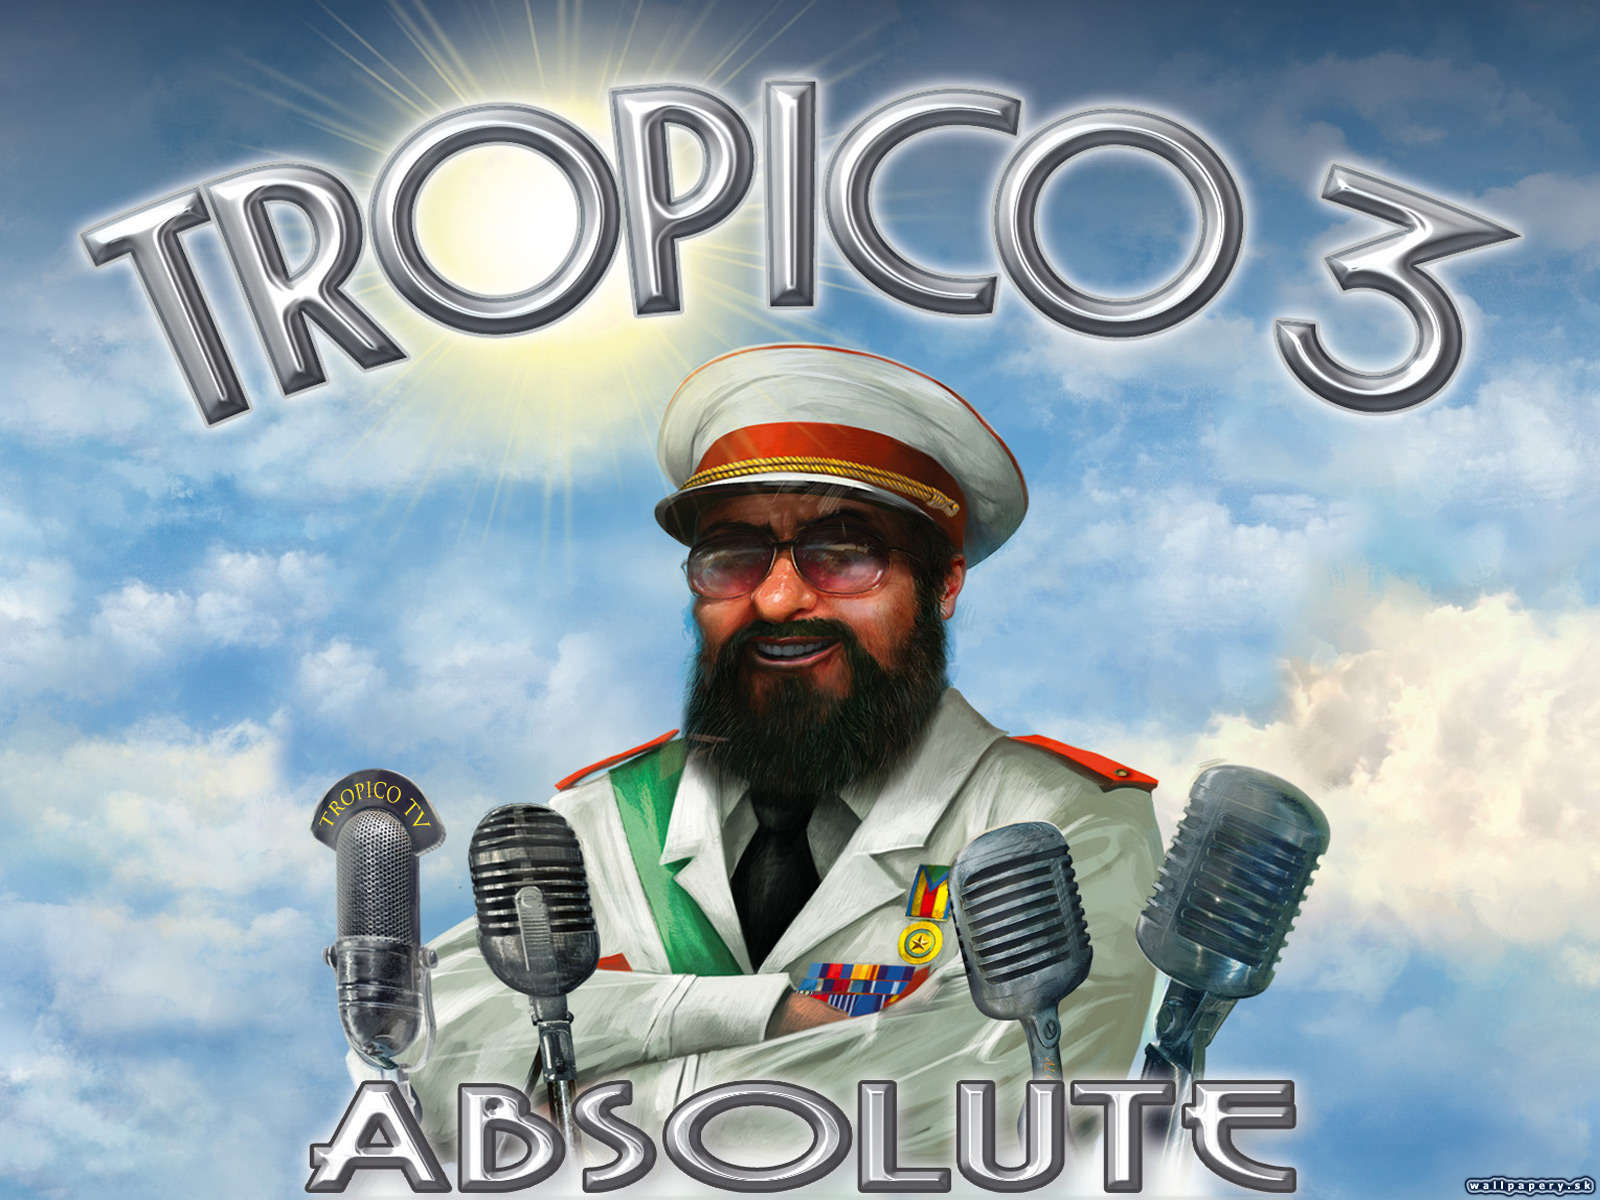 Tropico 3: Absolute Power - wallpaper 2